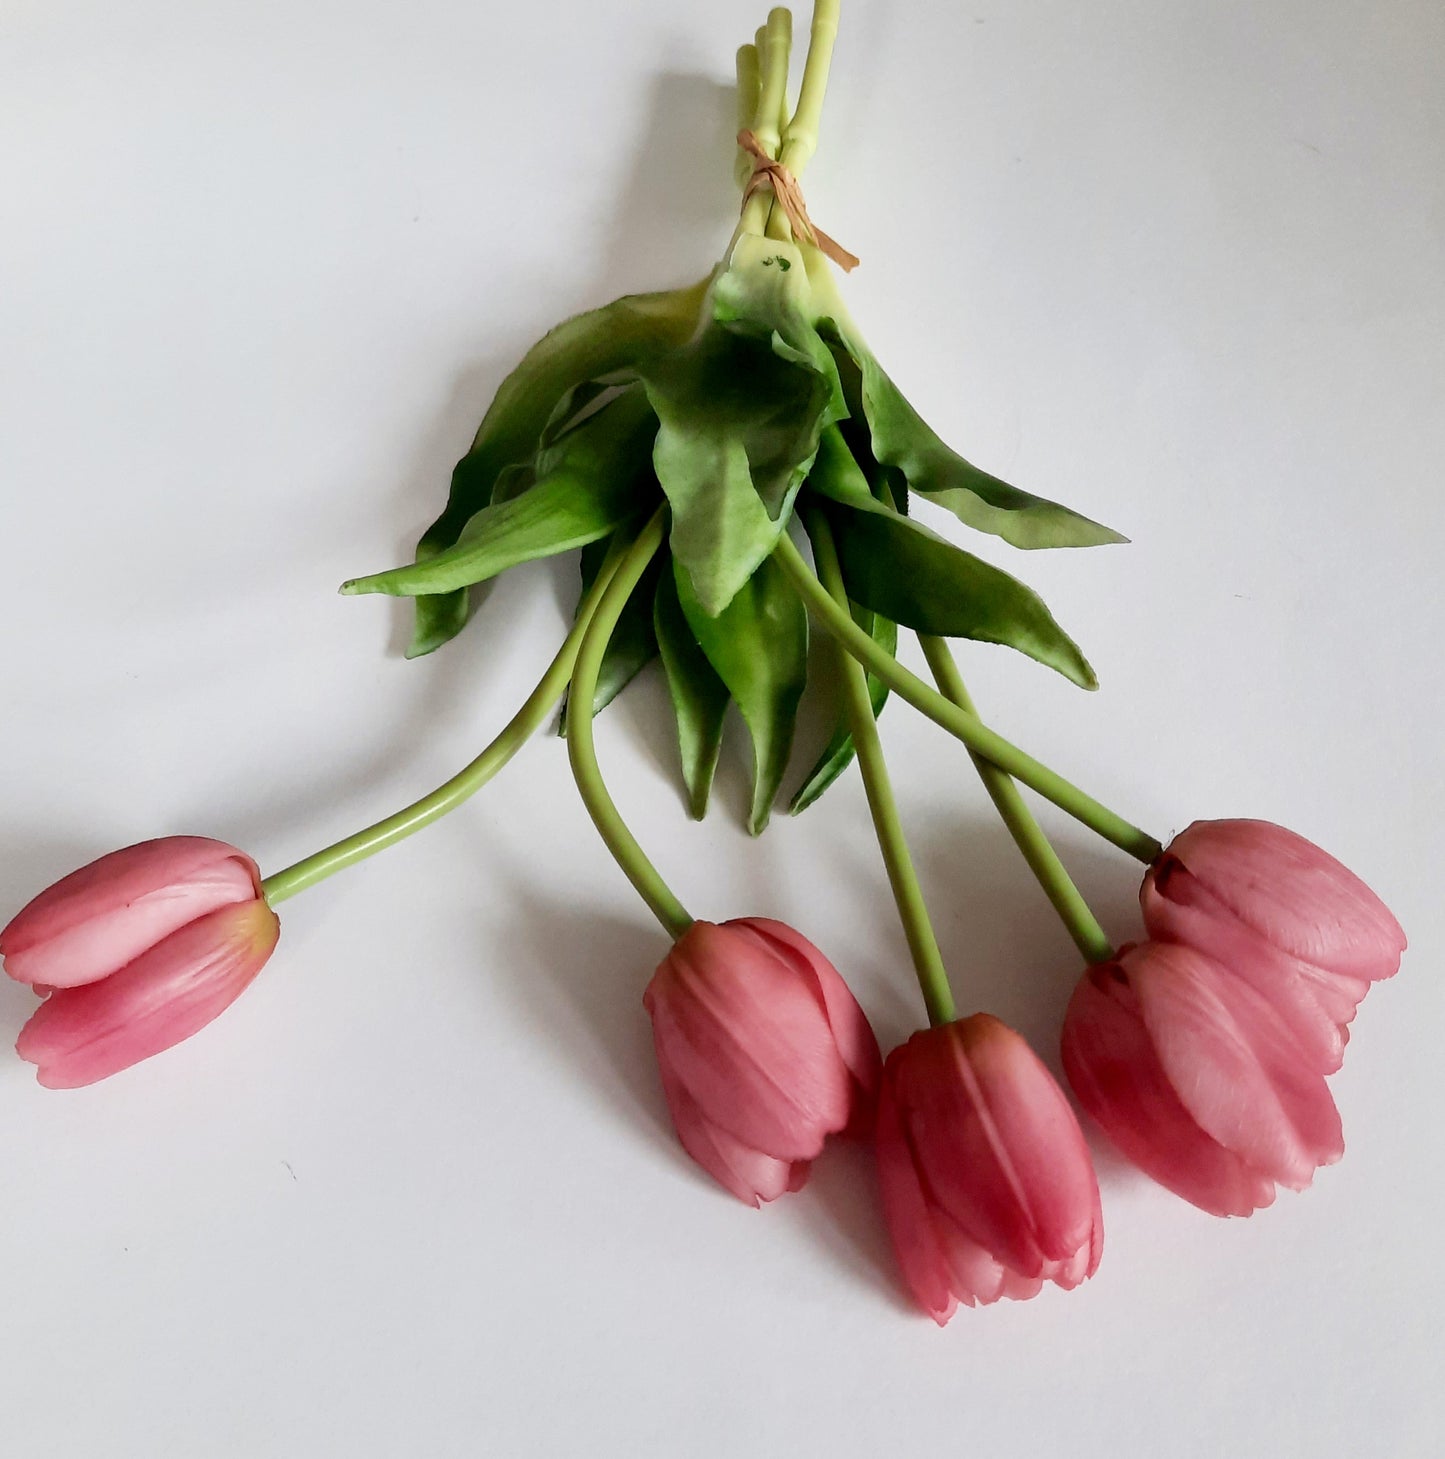 Pink rubber tulip artificial flower bouquet